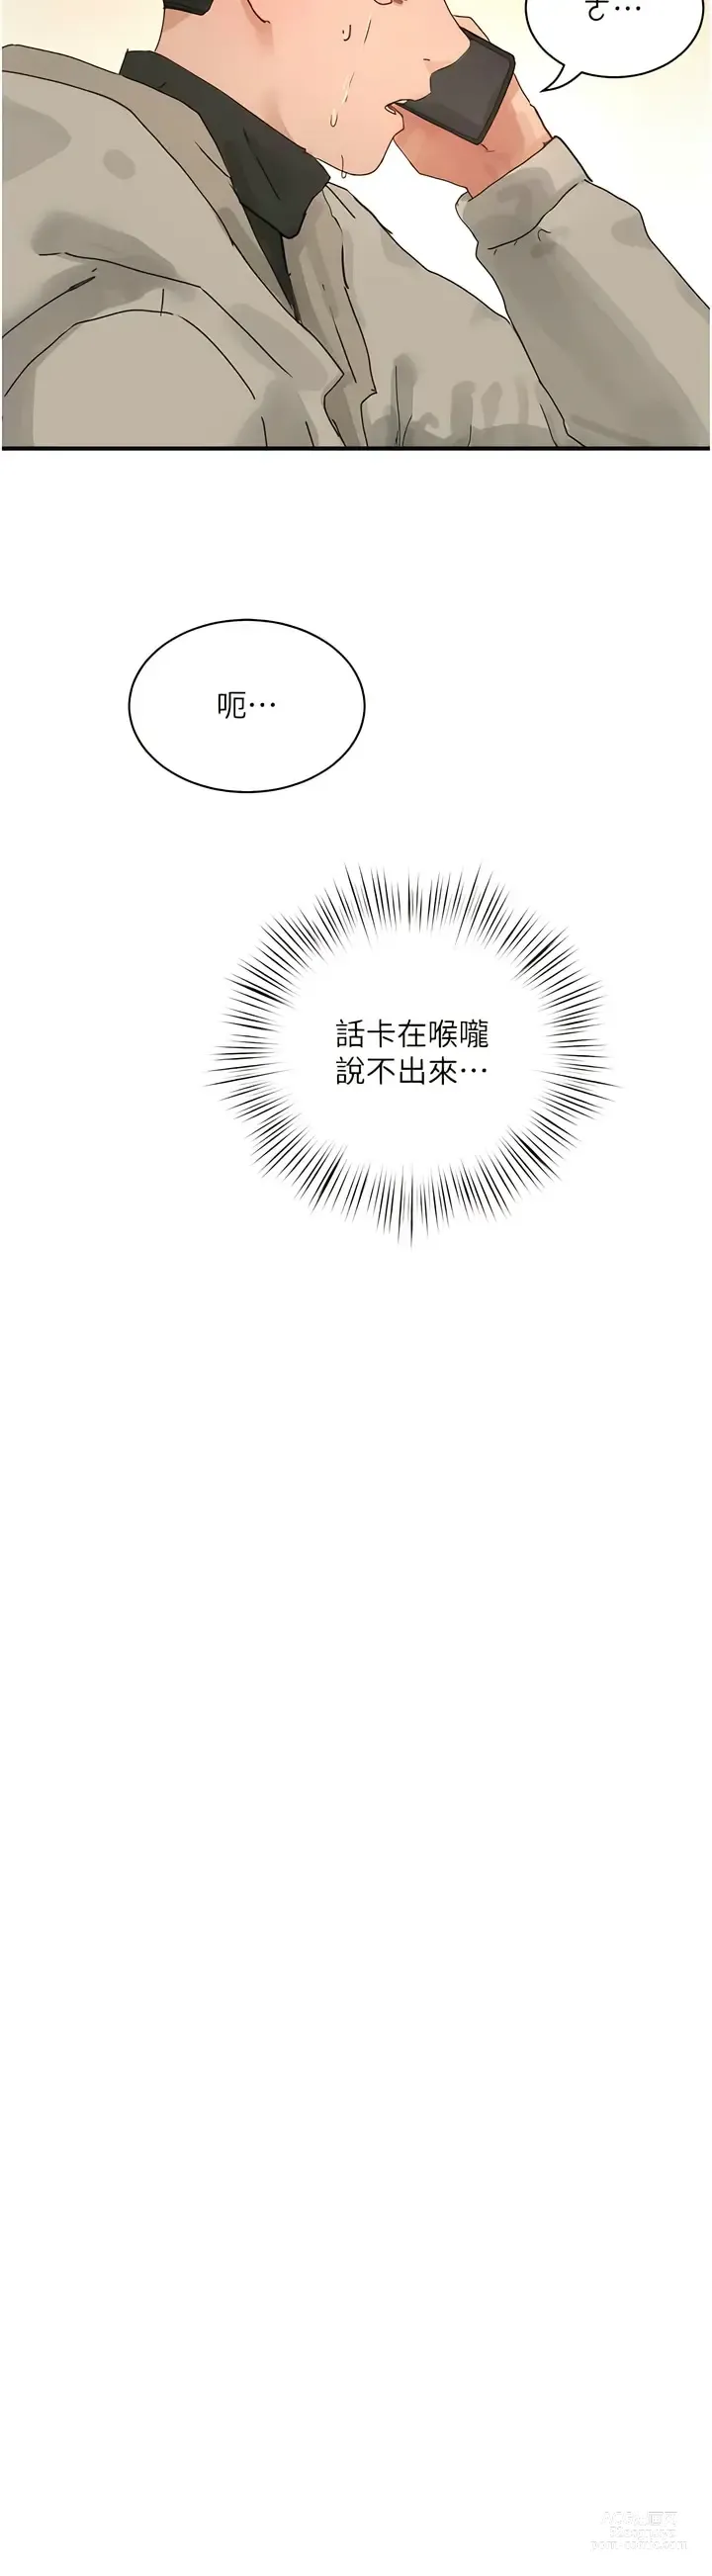 Page 931 of manga 夏日深处/Summer of Love 61-86